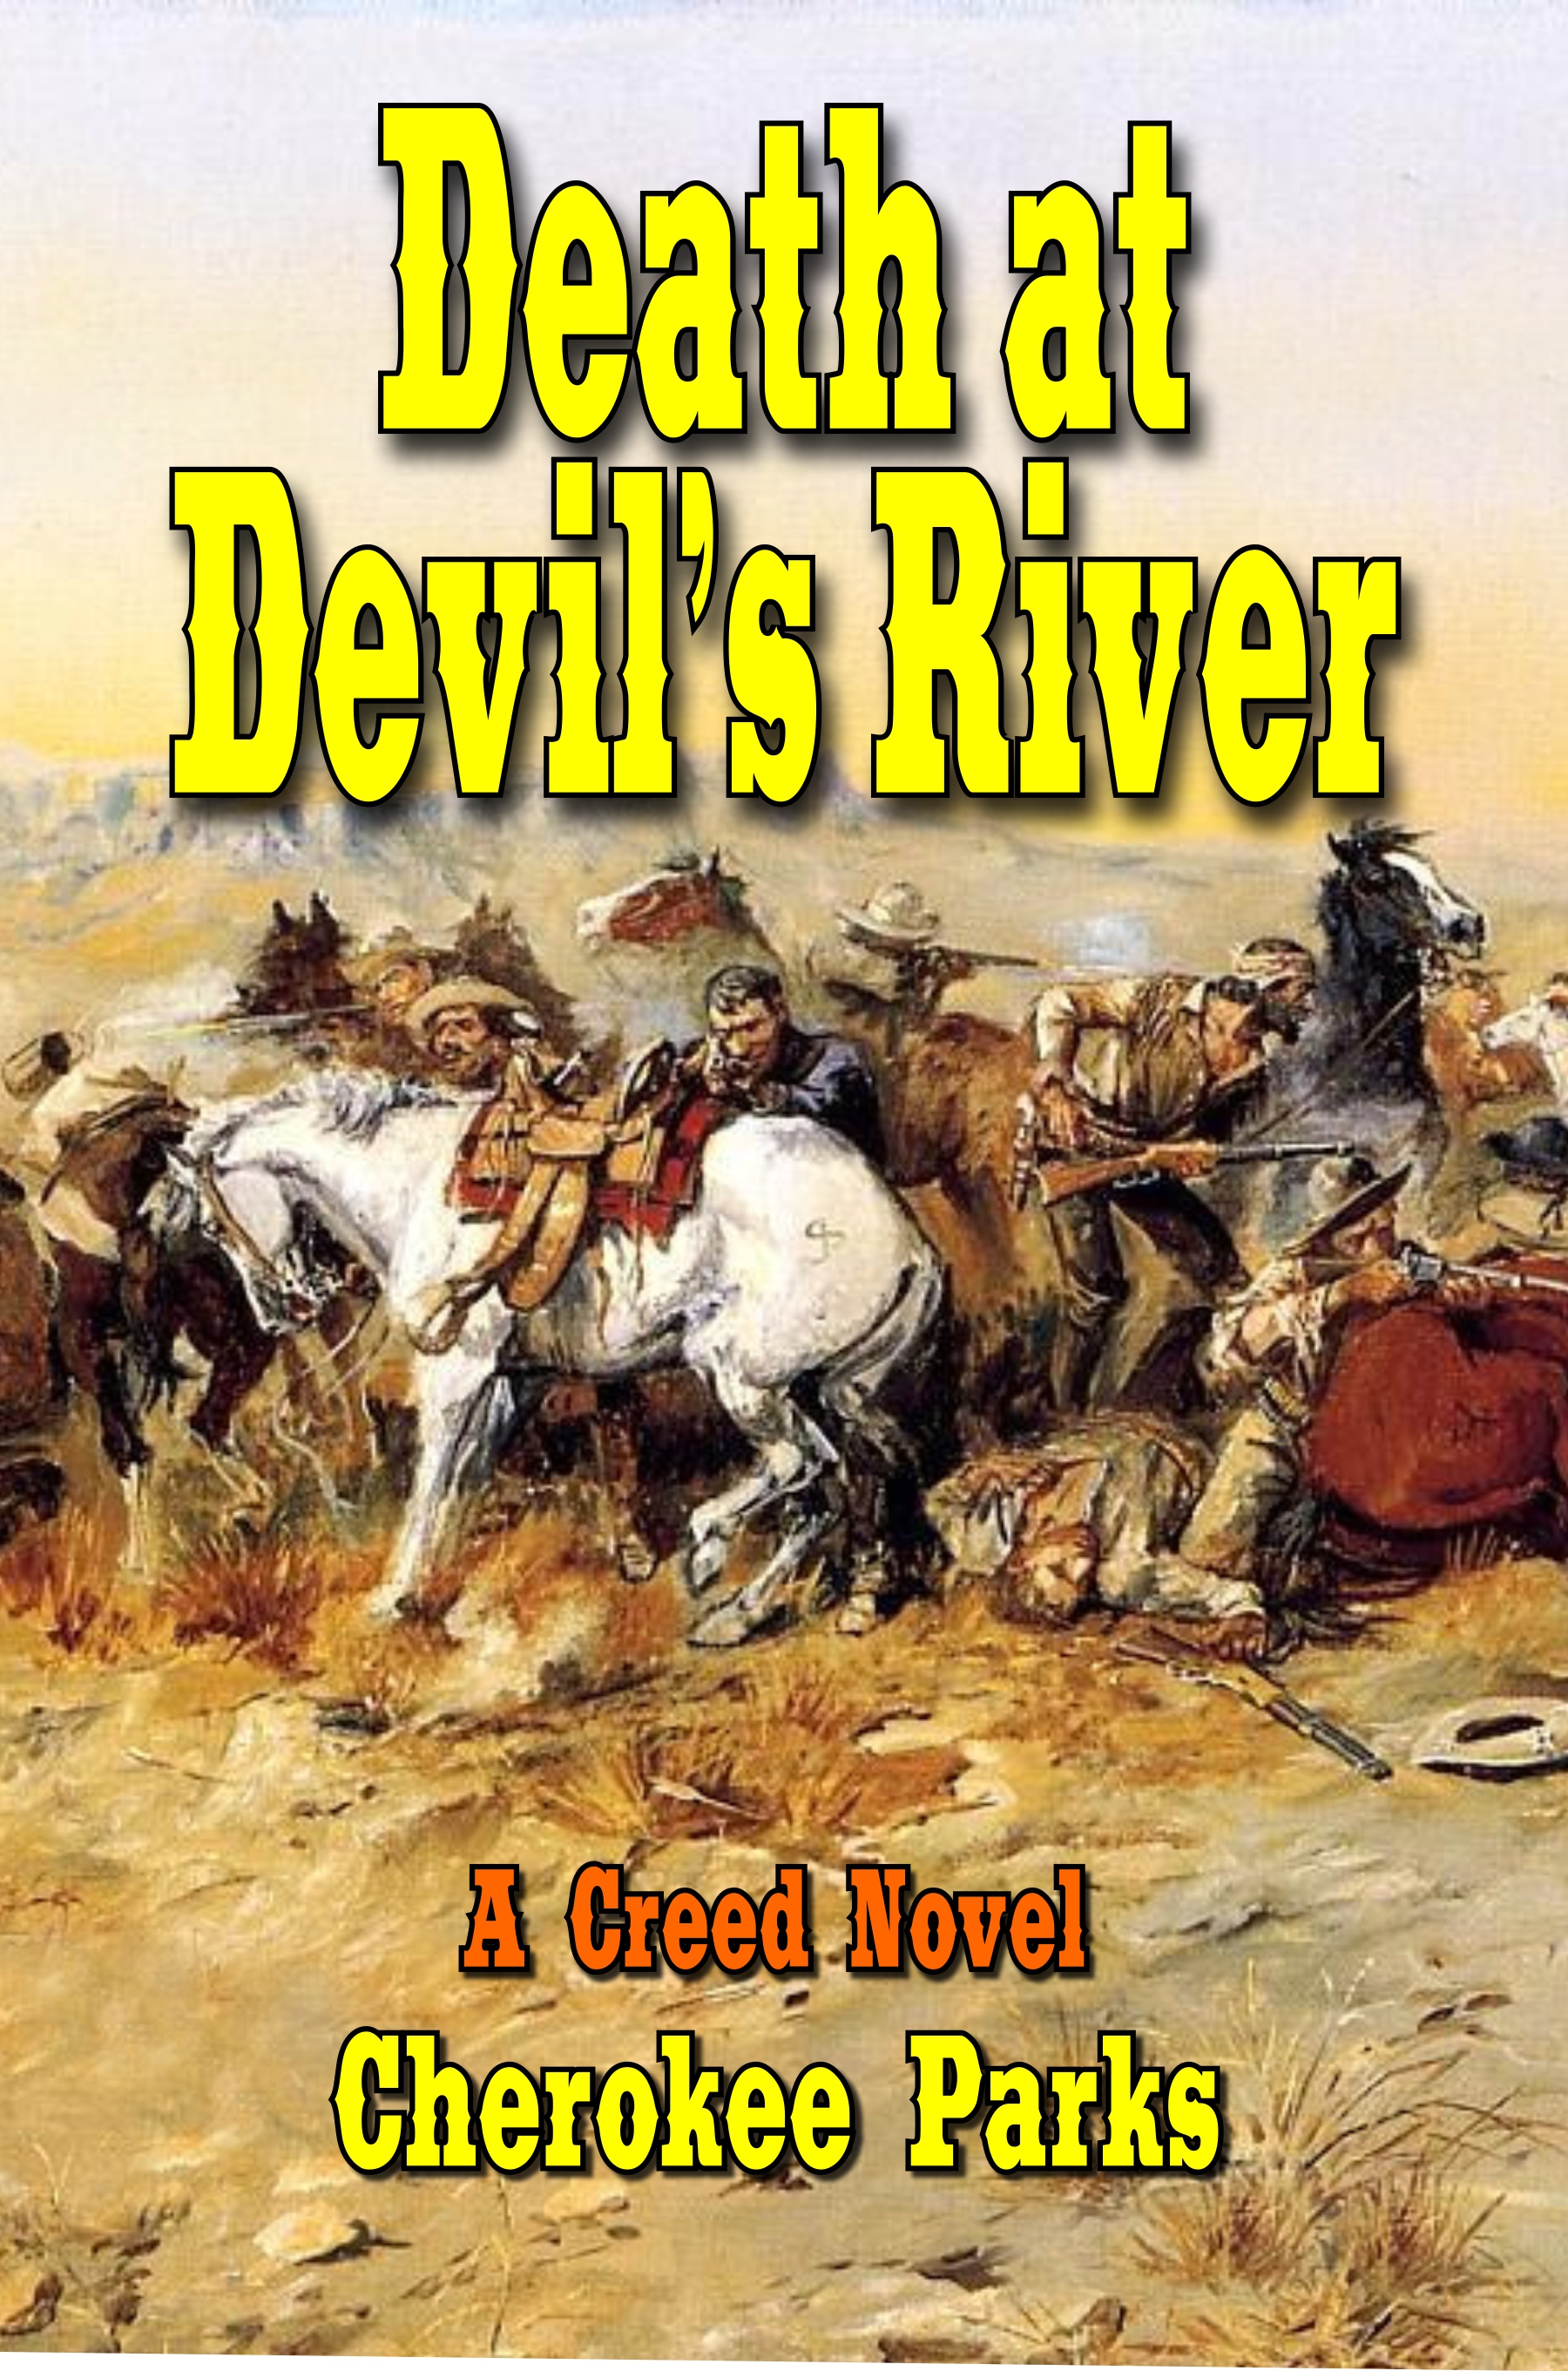 Death at Devil's River